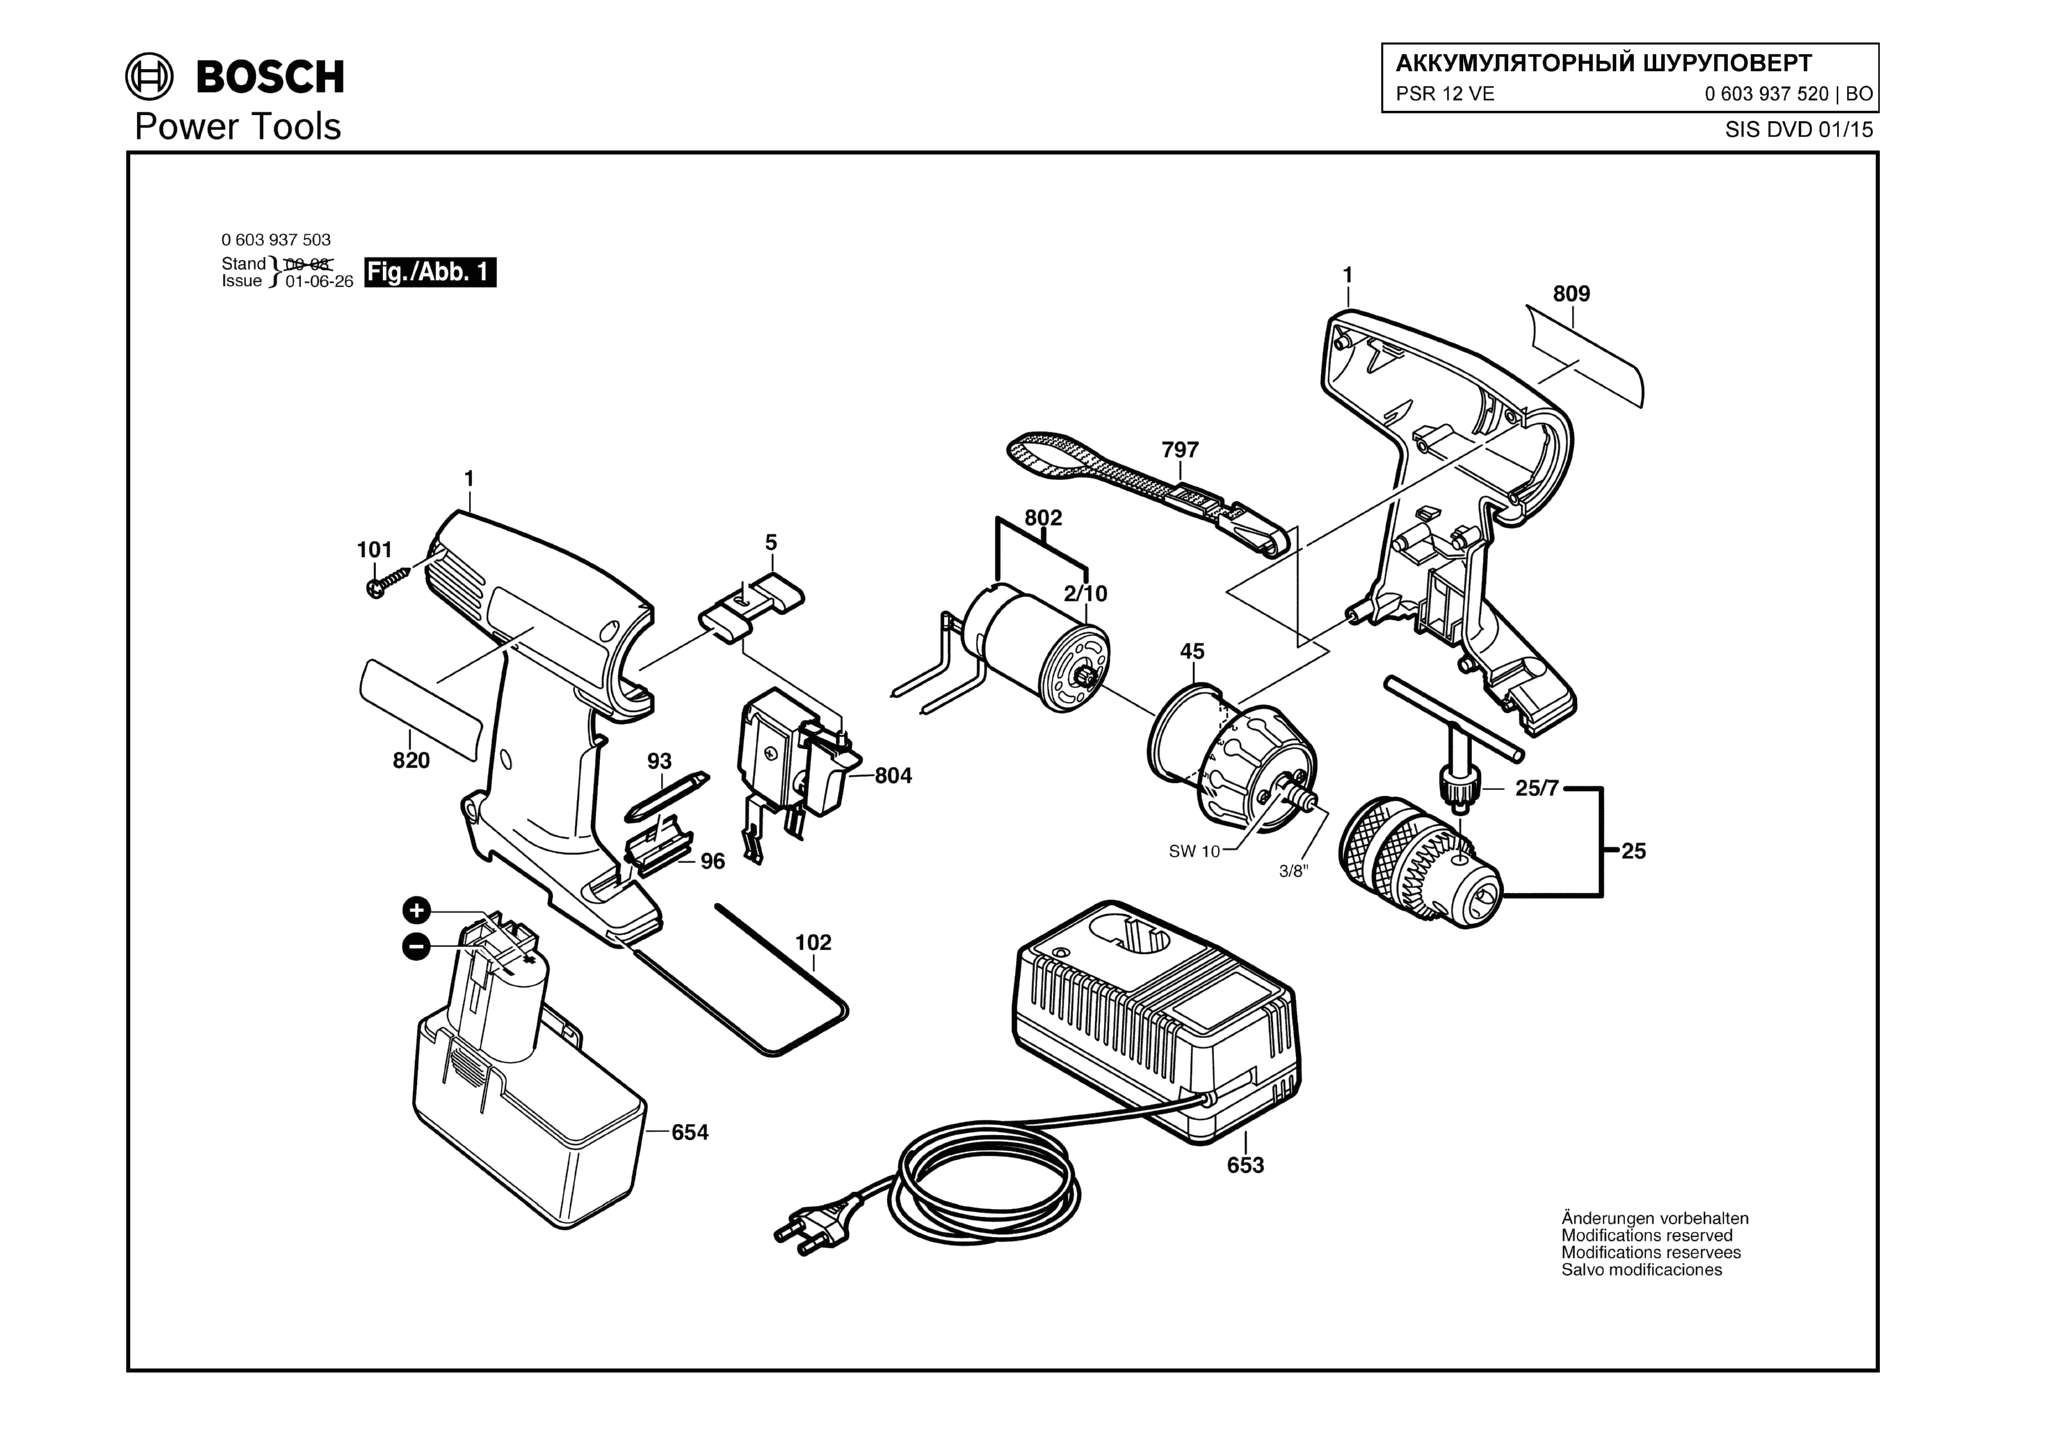 Запчасти, схема и деталировка Bosch PSR 12 VE (ТИП 0603937520)